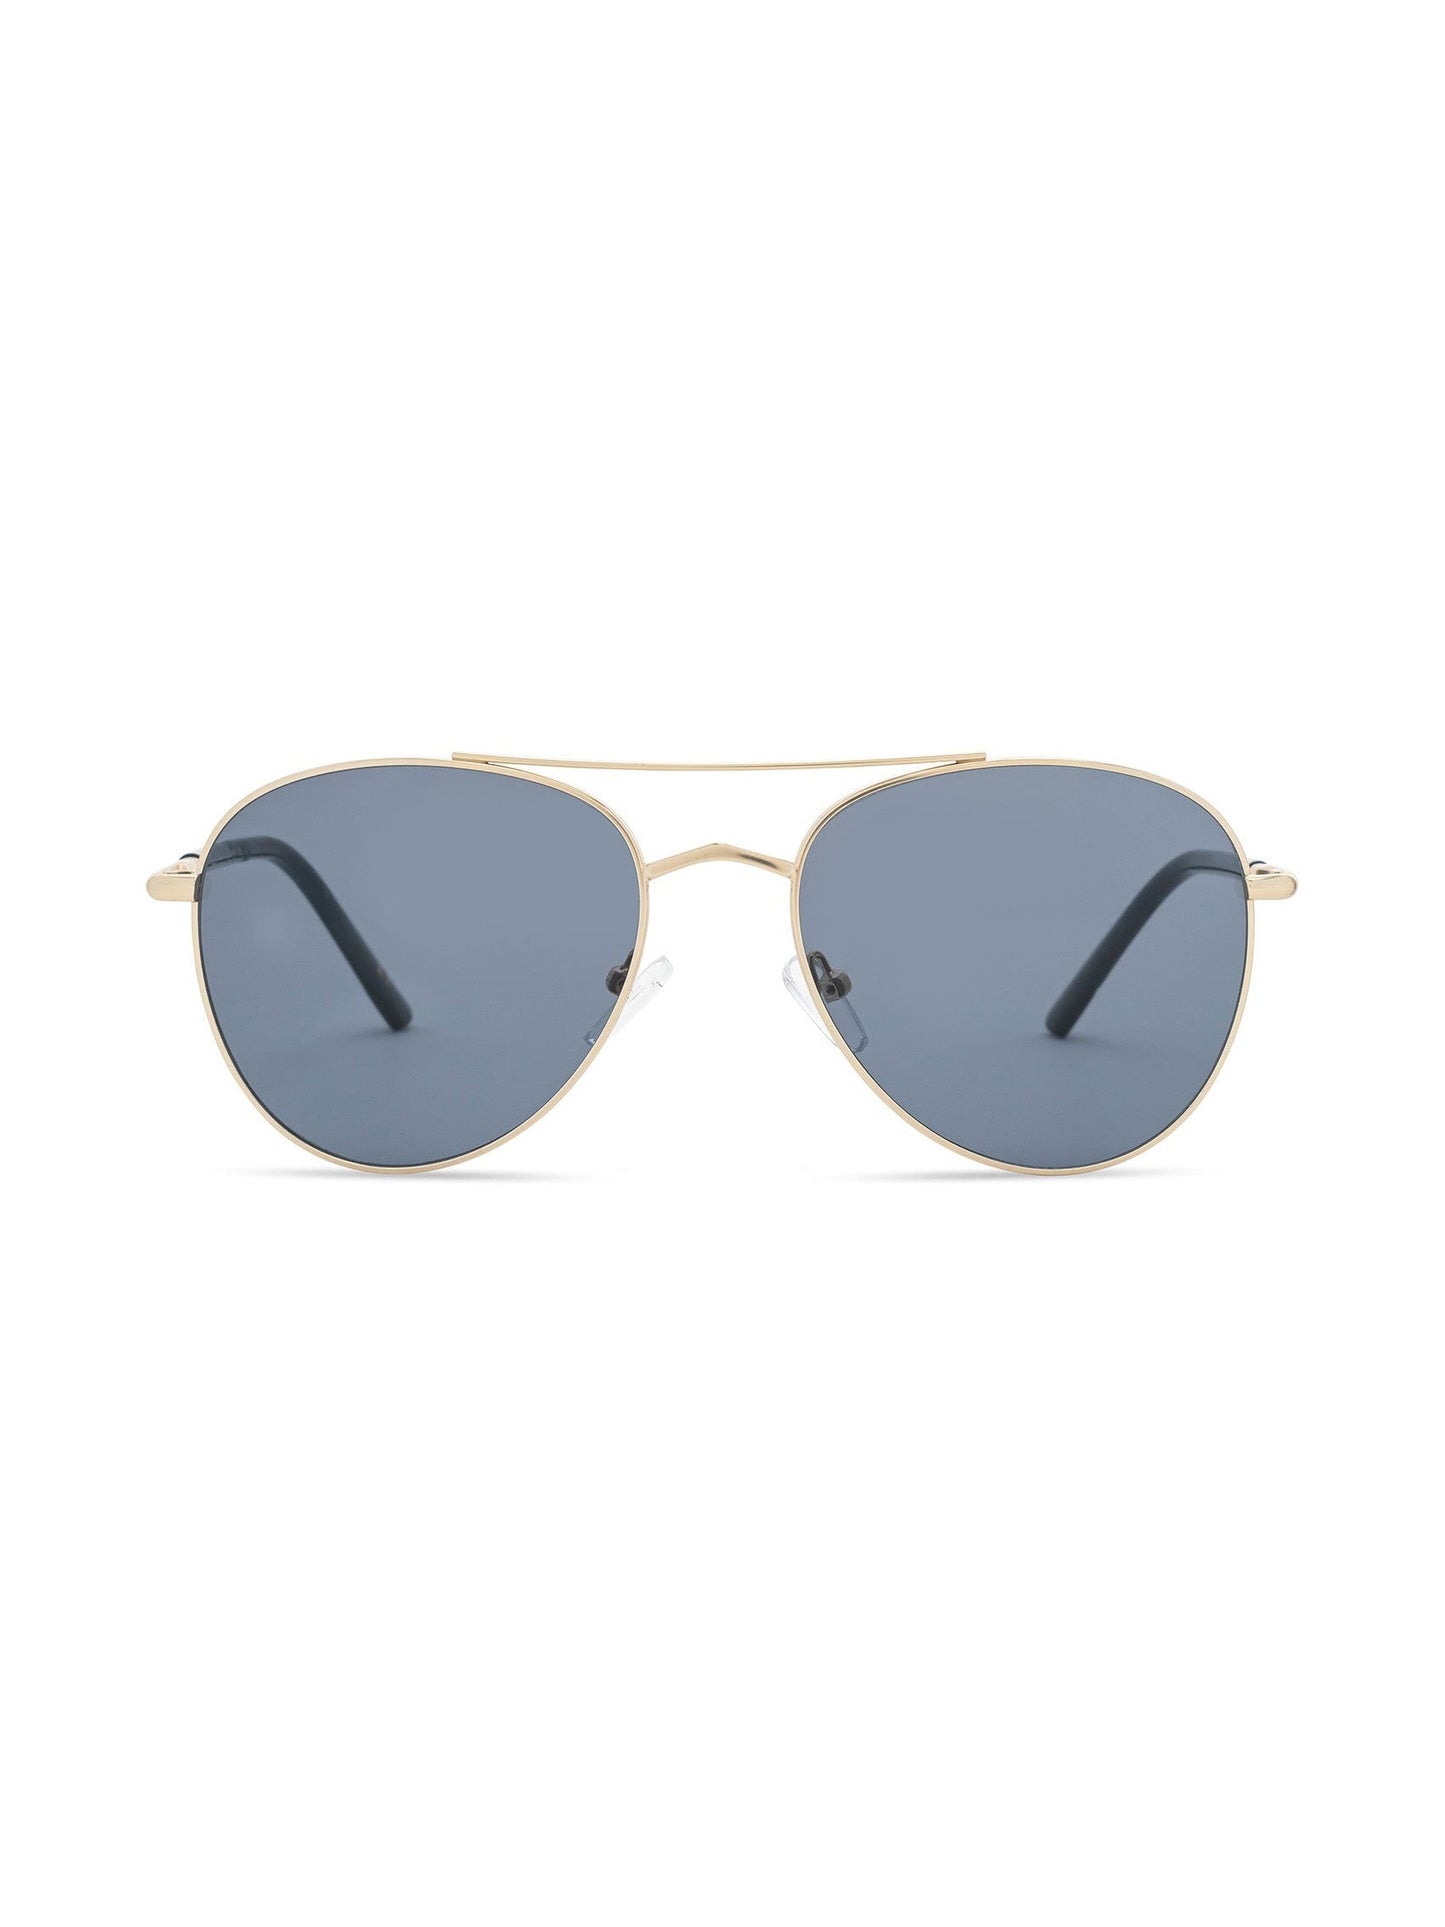 MAVERICK Premium Sunglasses with "HELLO SUNSHINE" Signature Font - Rae Dunn Wear